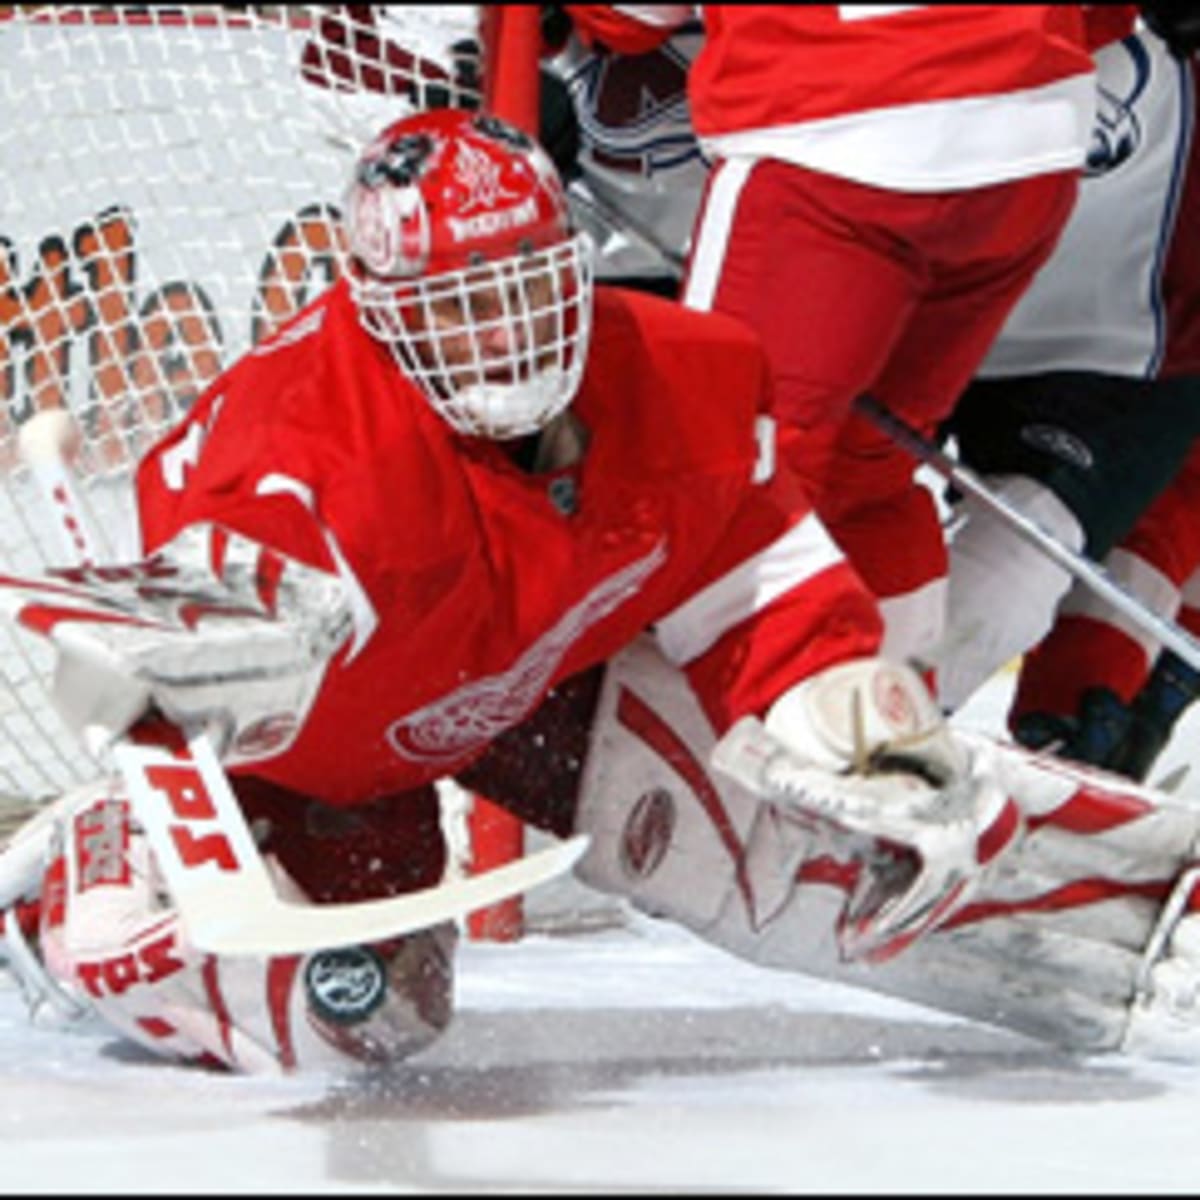 Ottawa Senators goalie Ray Emery (1) makes a pads save against the